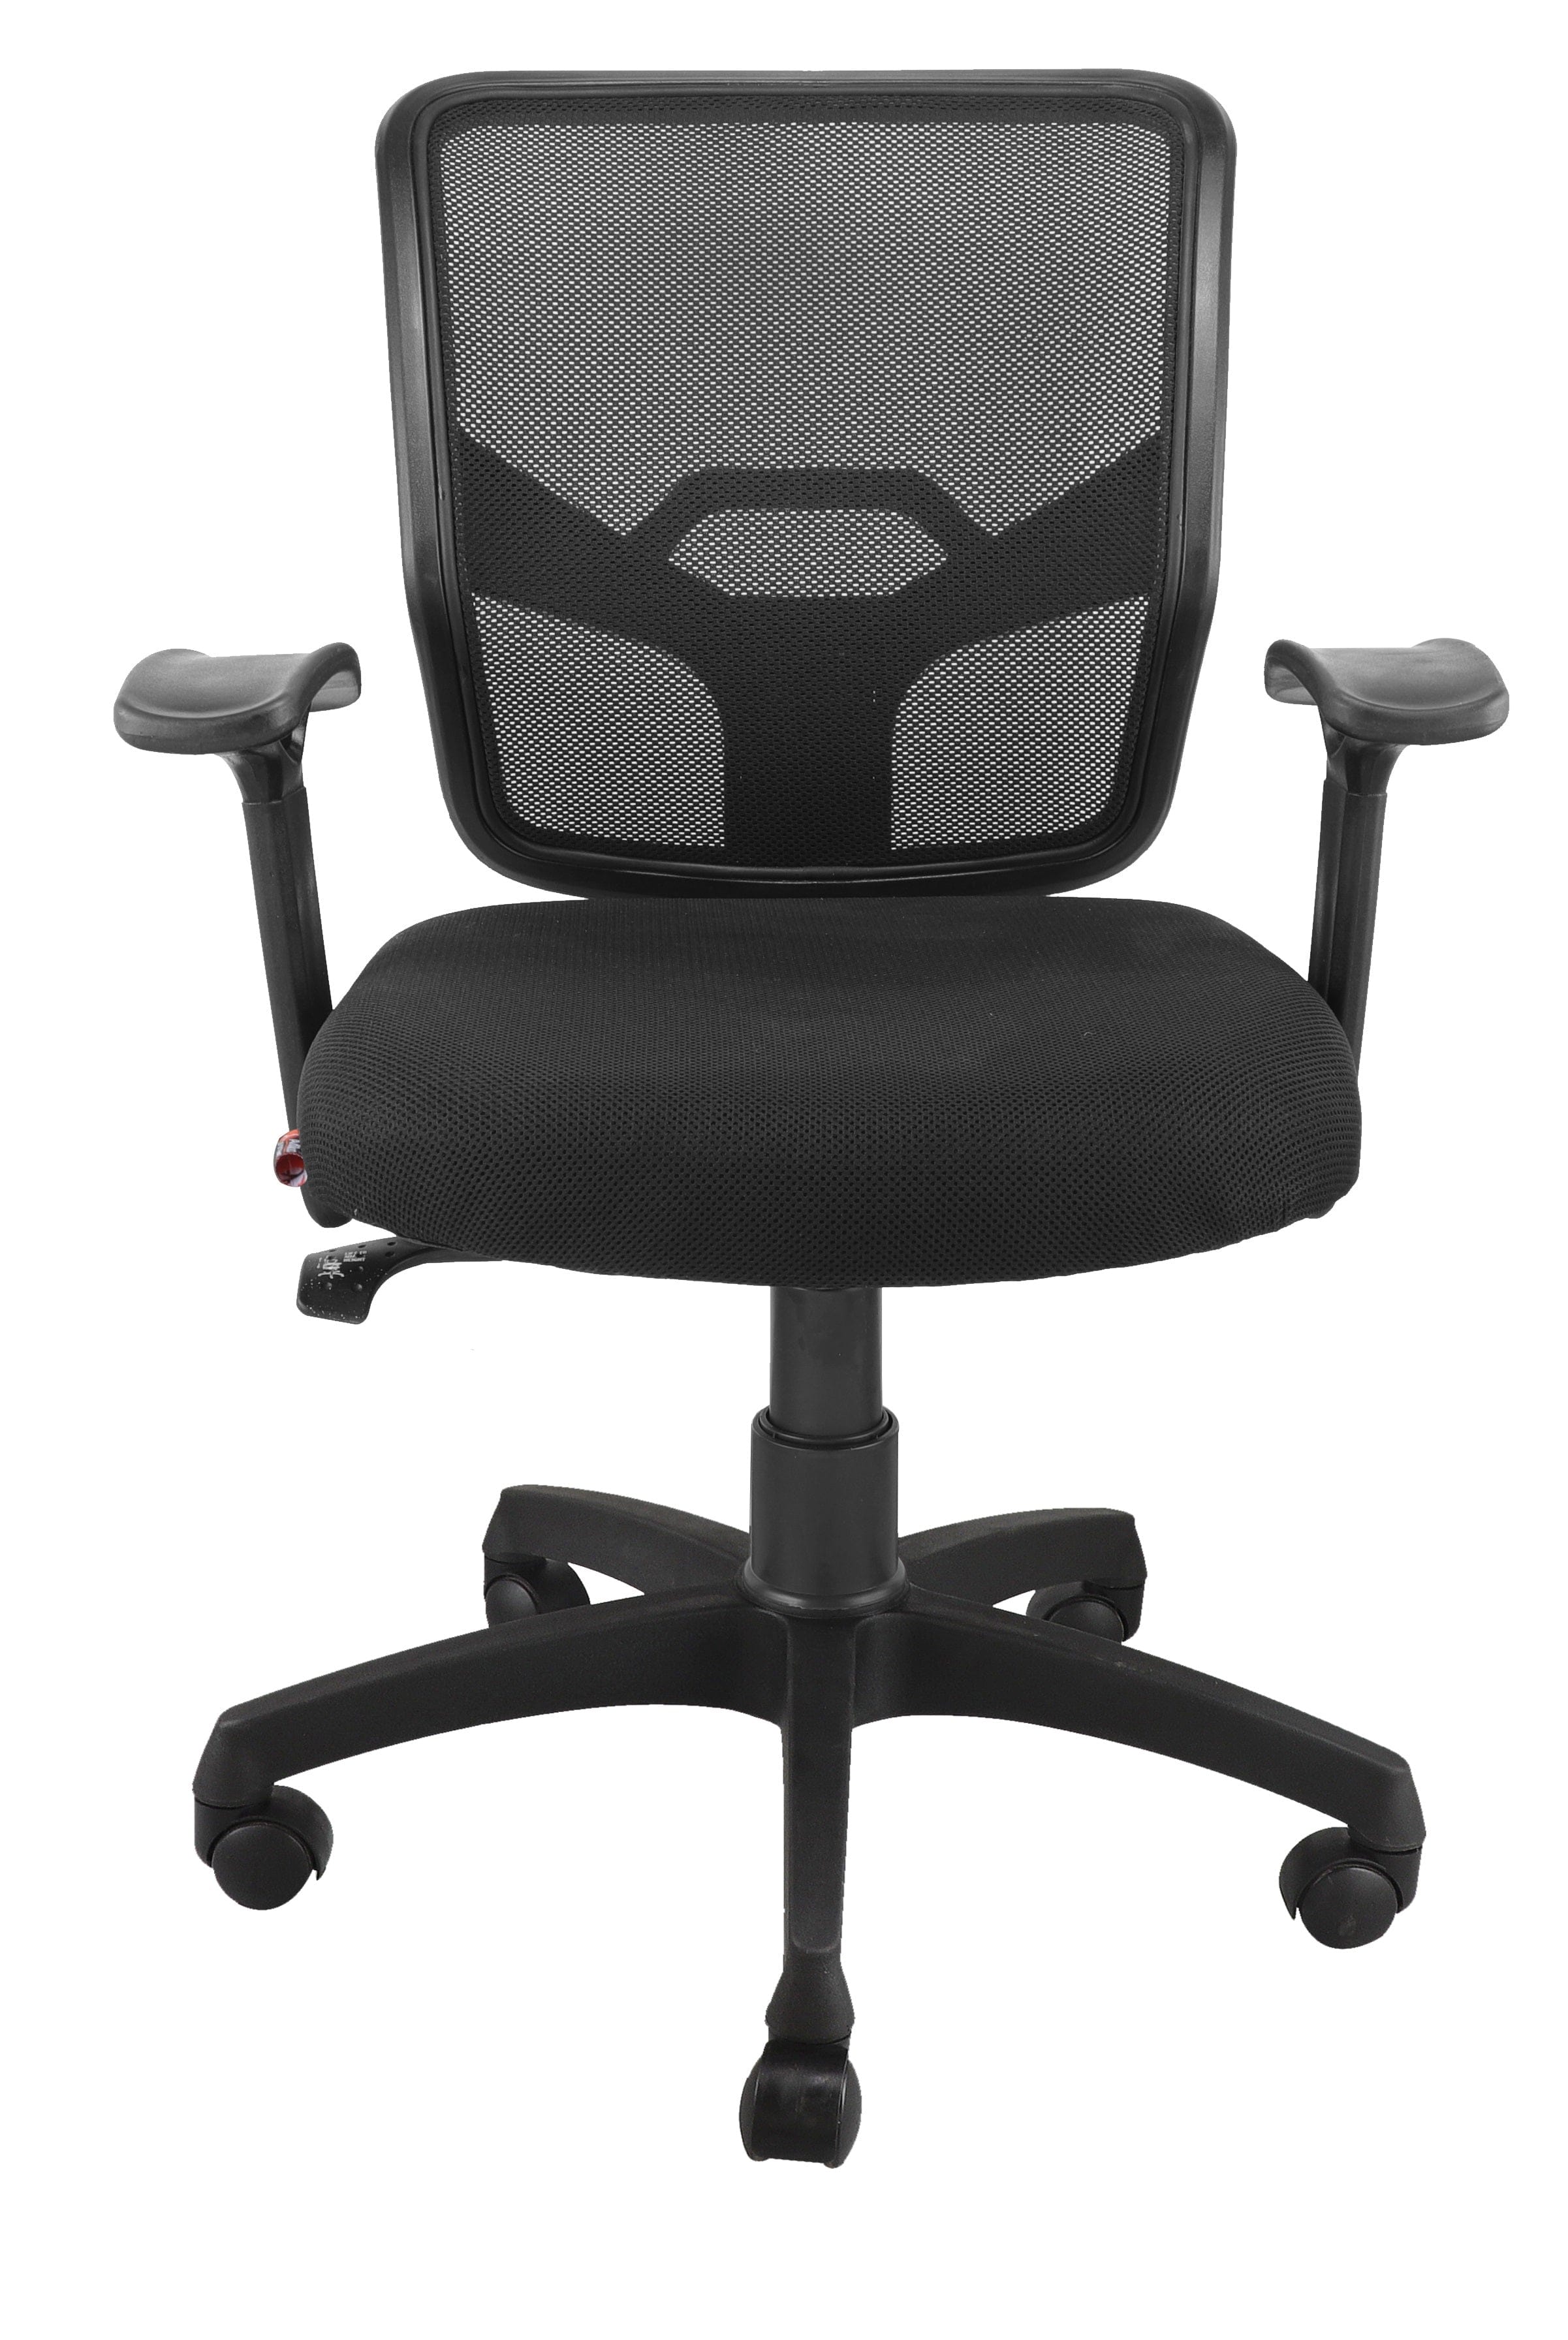 Smart Ergonomic Office Chair